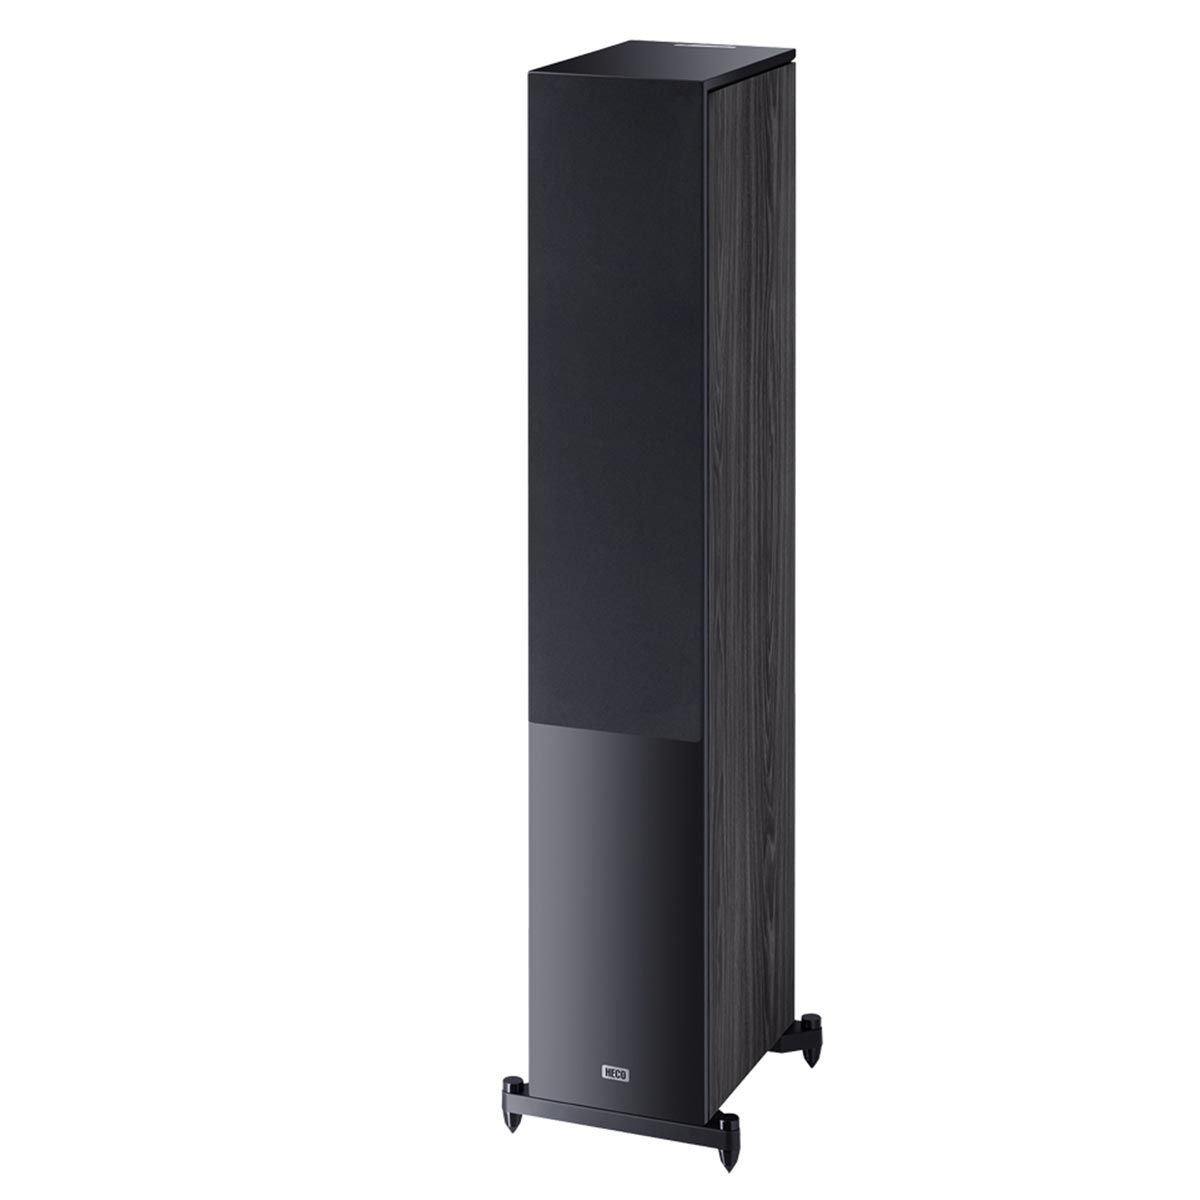 HECO Aurora 700 Floorstanding Speaker w/ grill - black